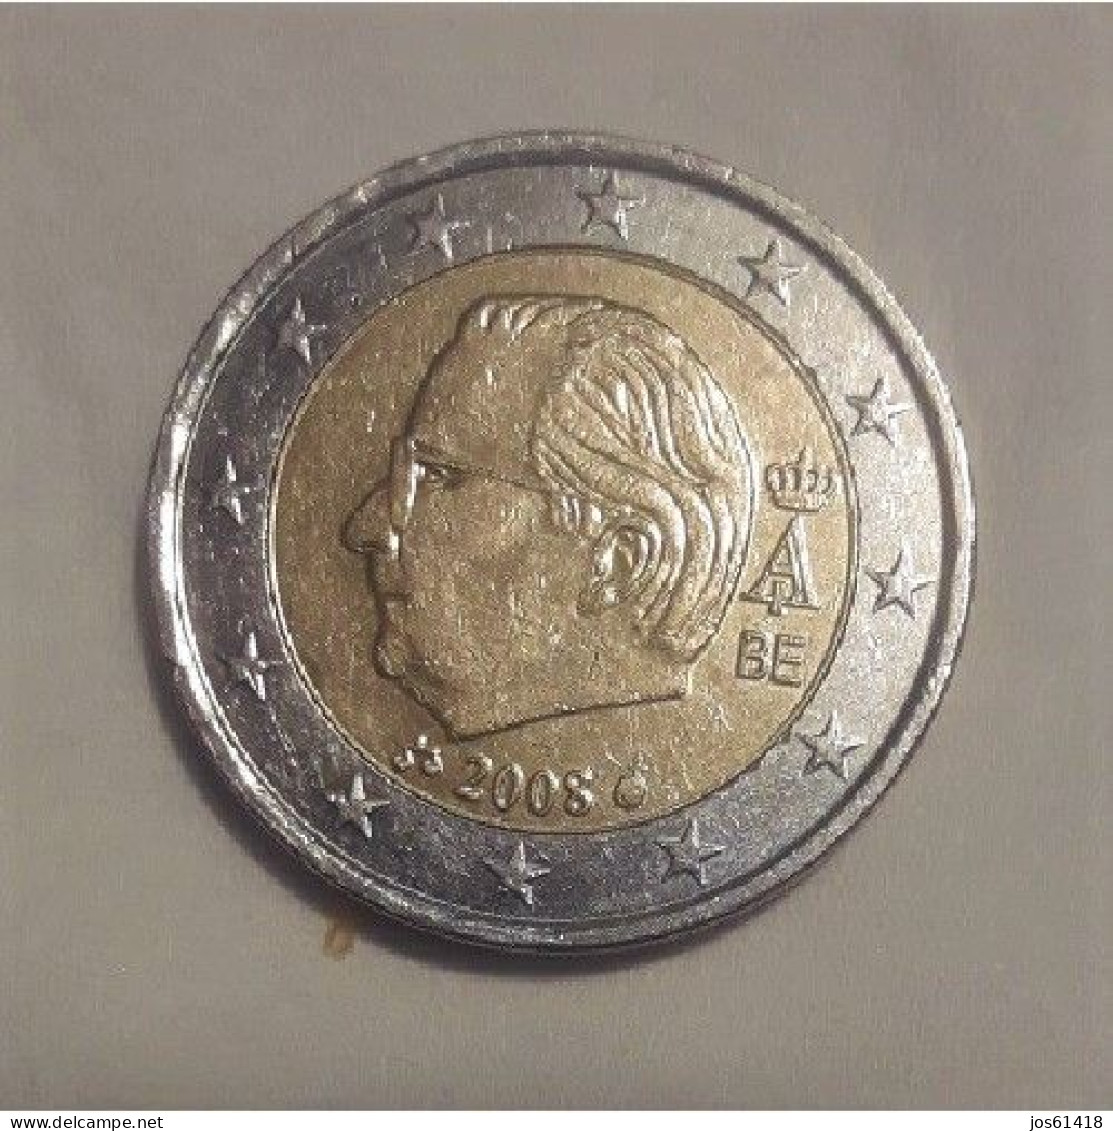 2 Euros Bèlgica / Belgium  2008  BC - België